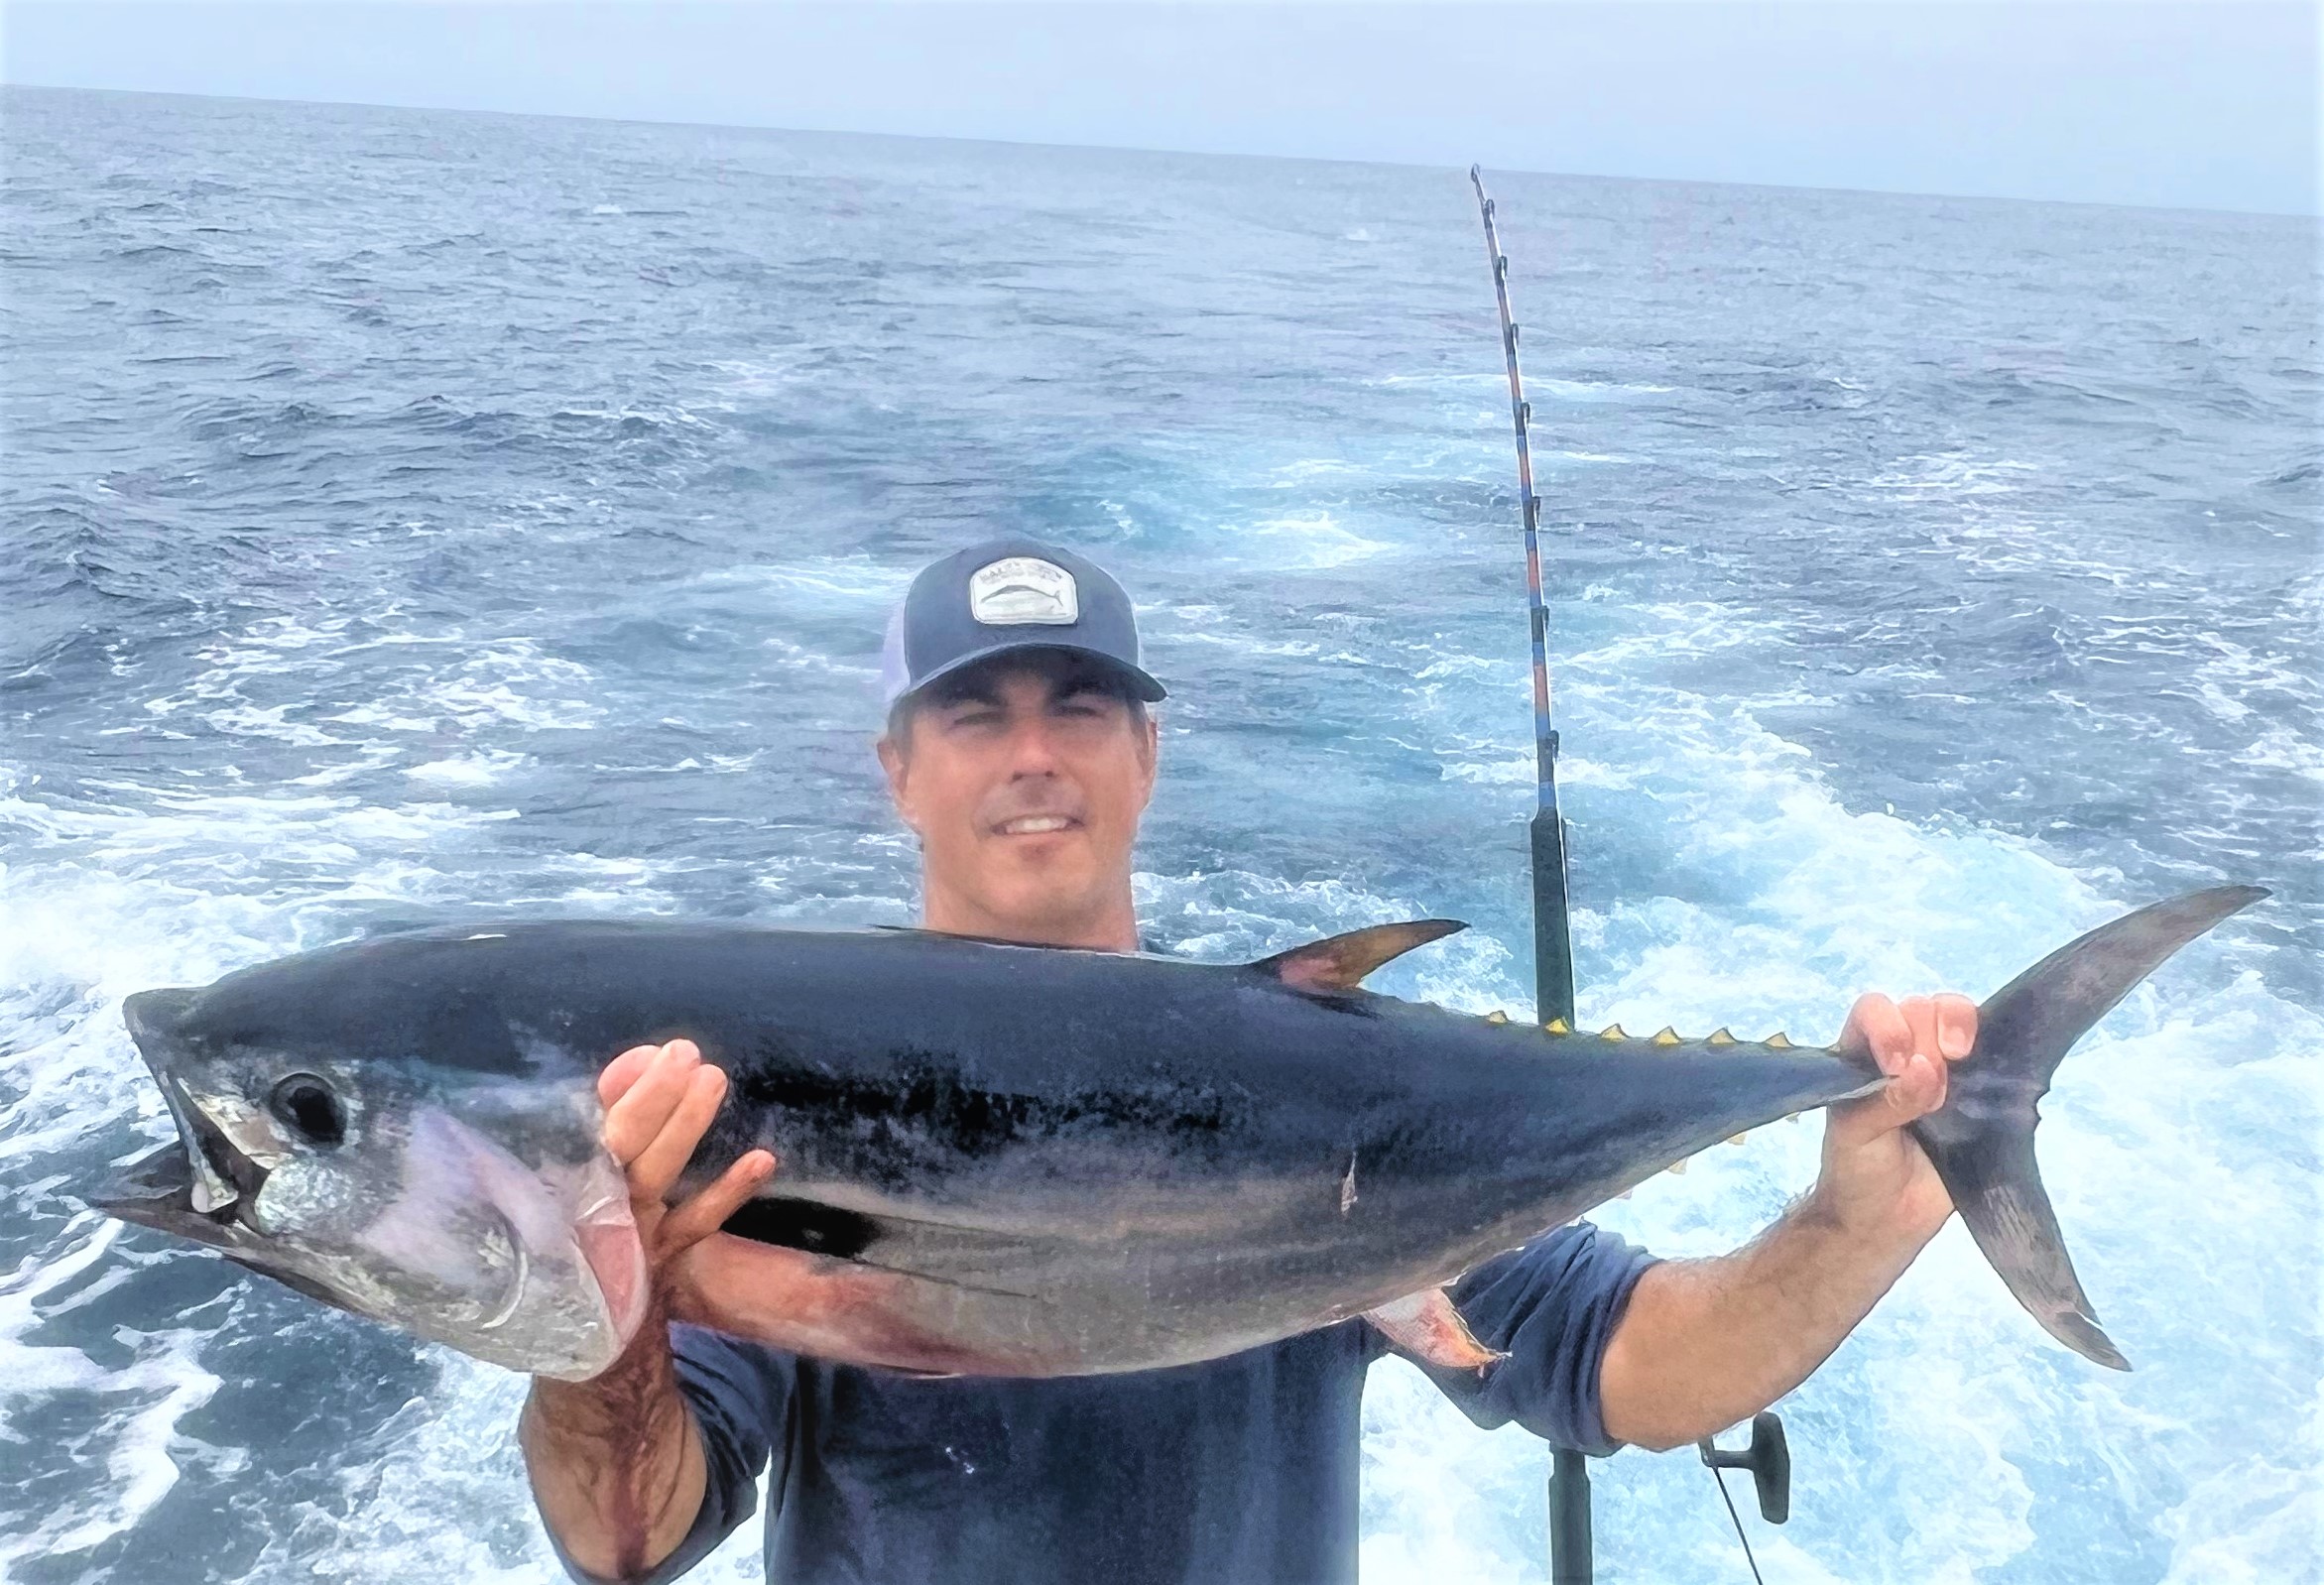 Man holding a large tuna fish